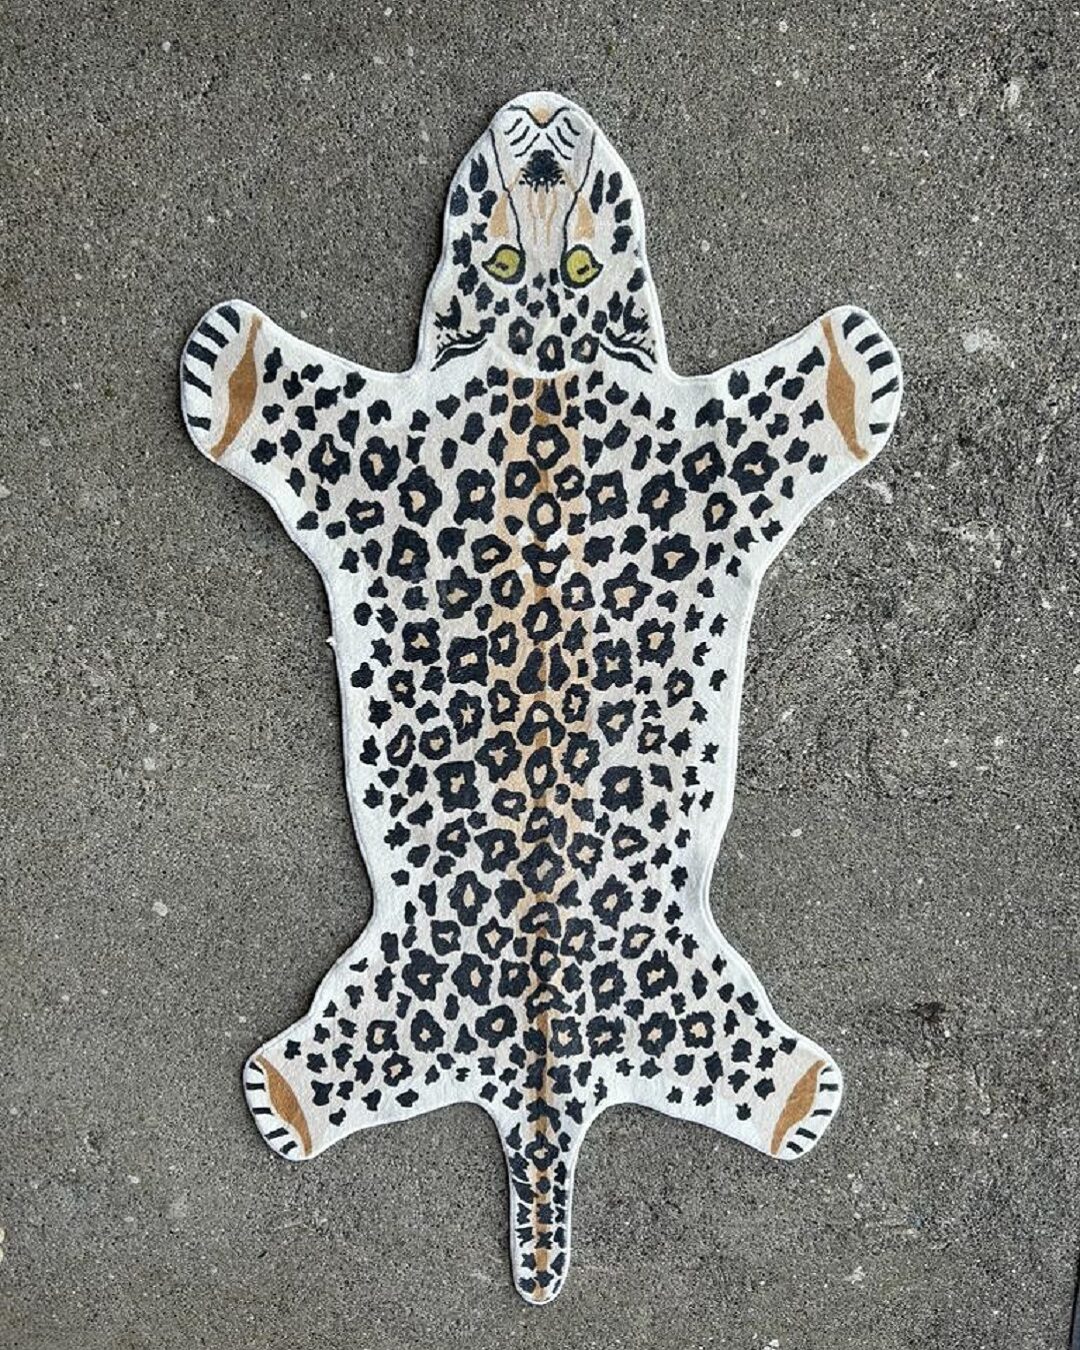 Leopard rug on concrete